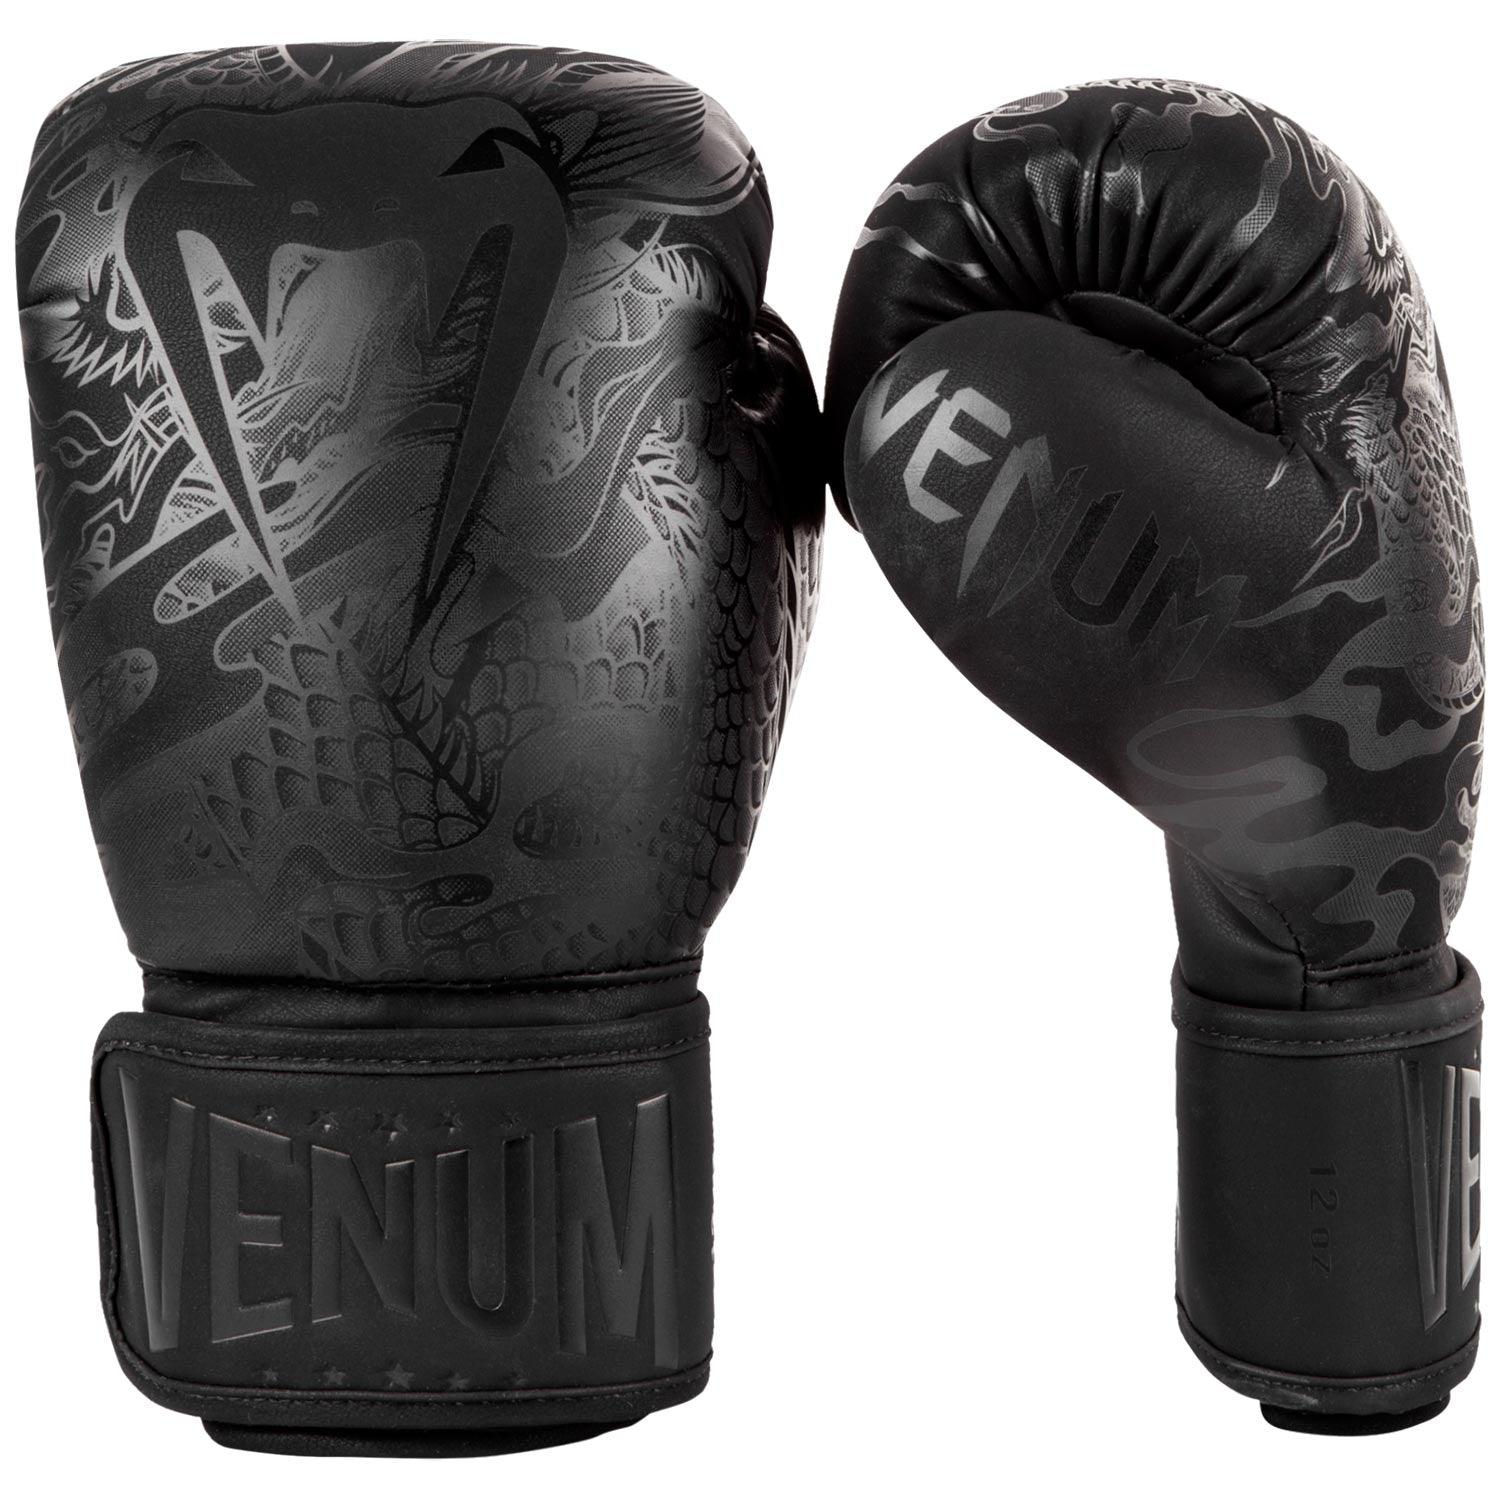 Venum Dragon's Flight Boxing Gloves - Black/Black Picture 2